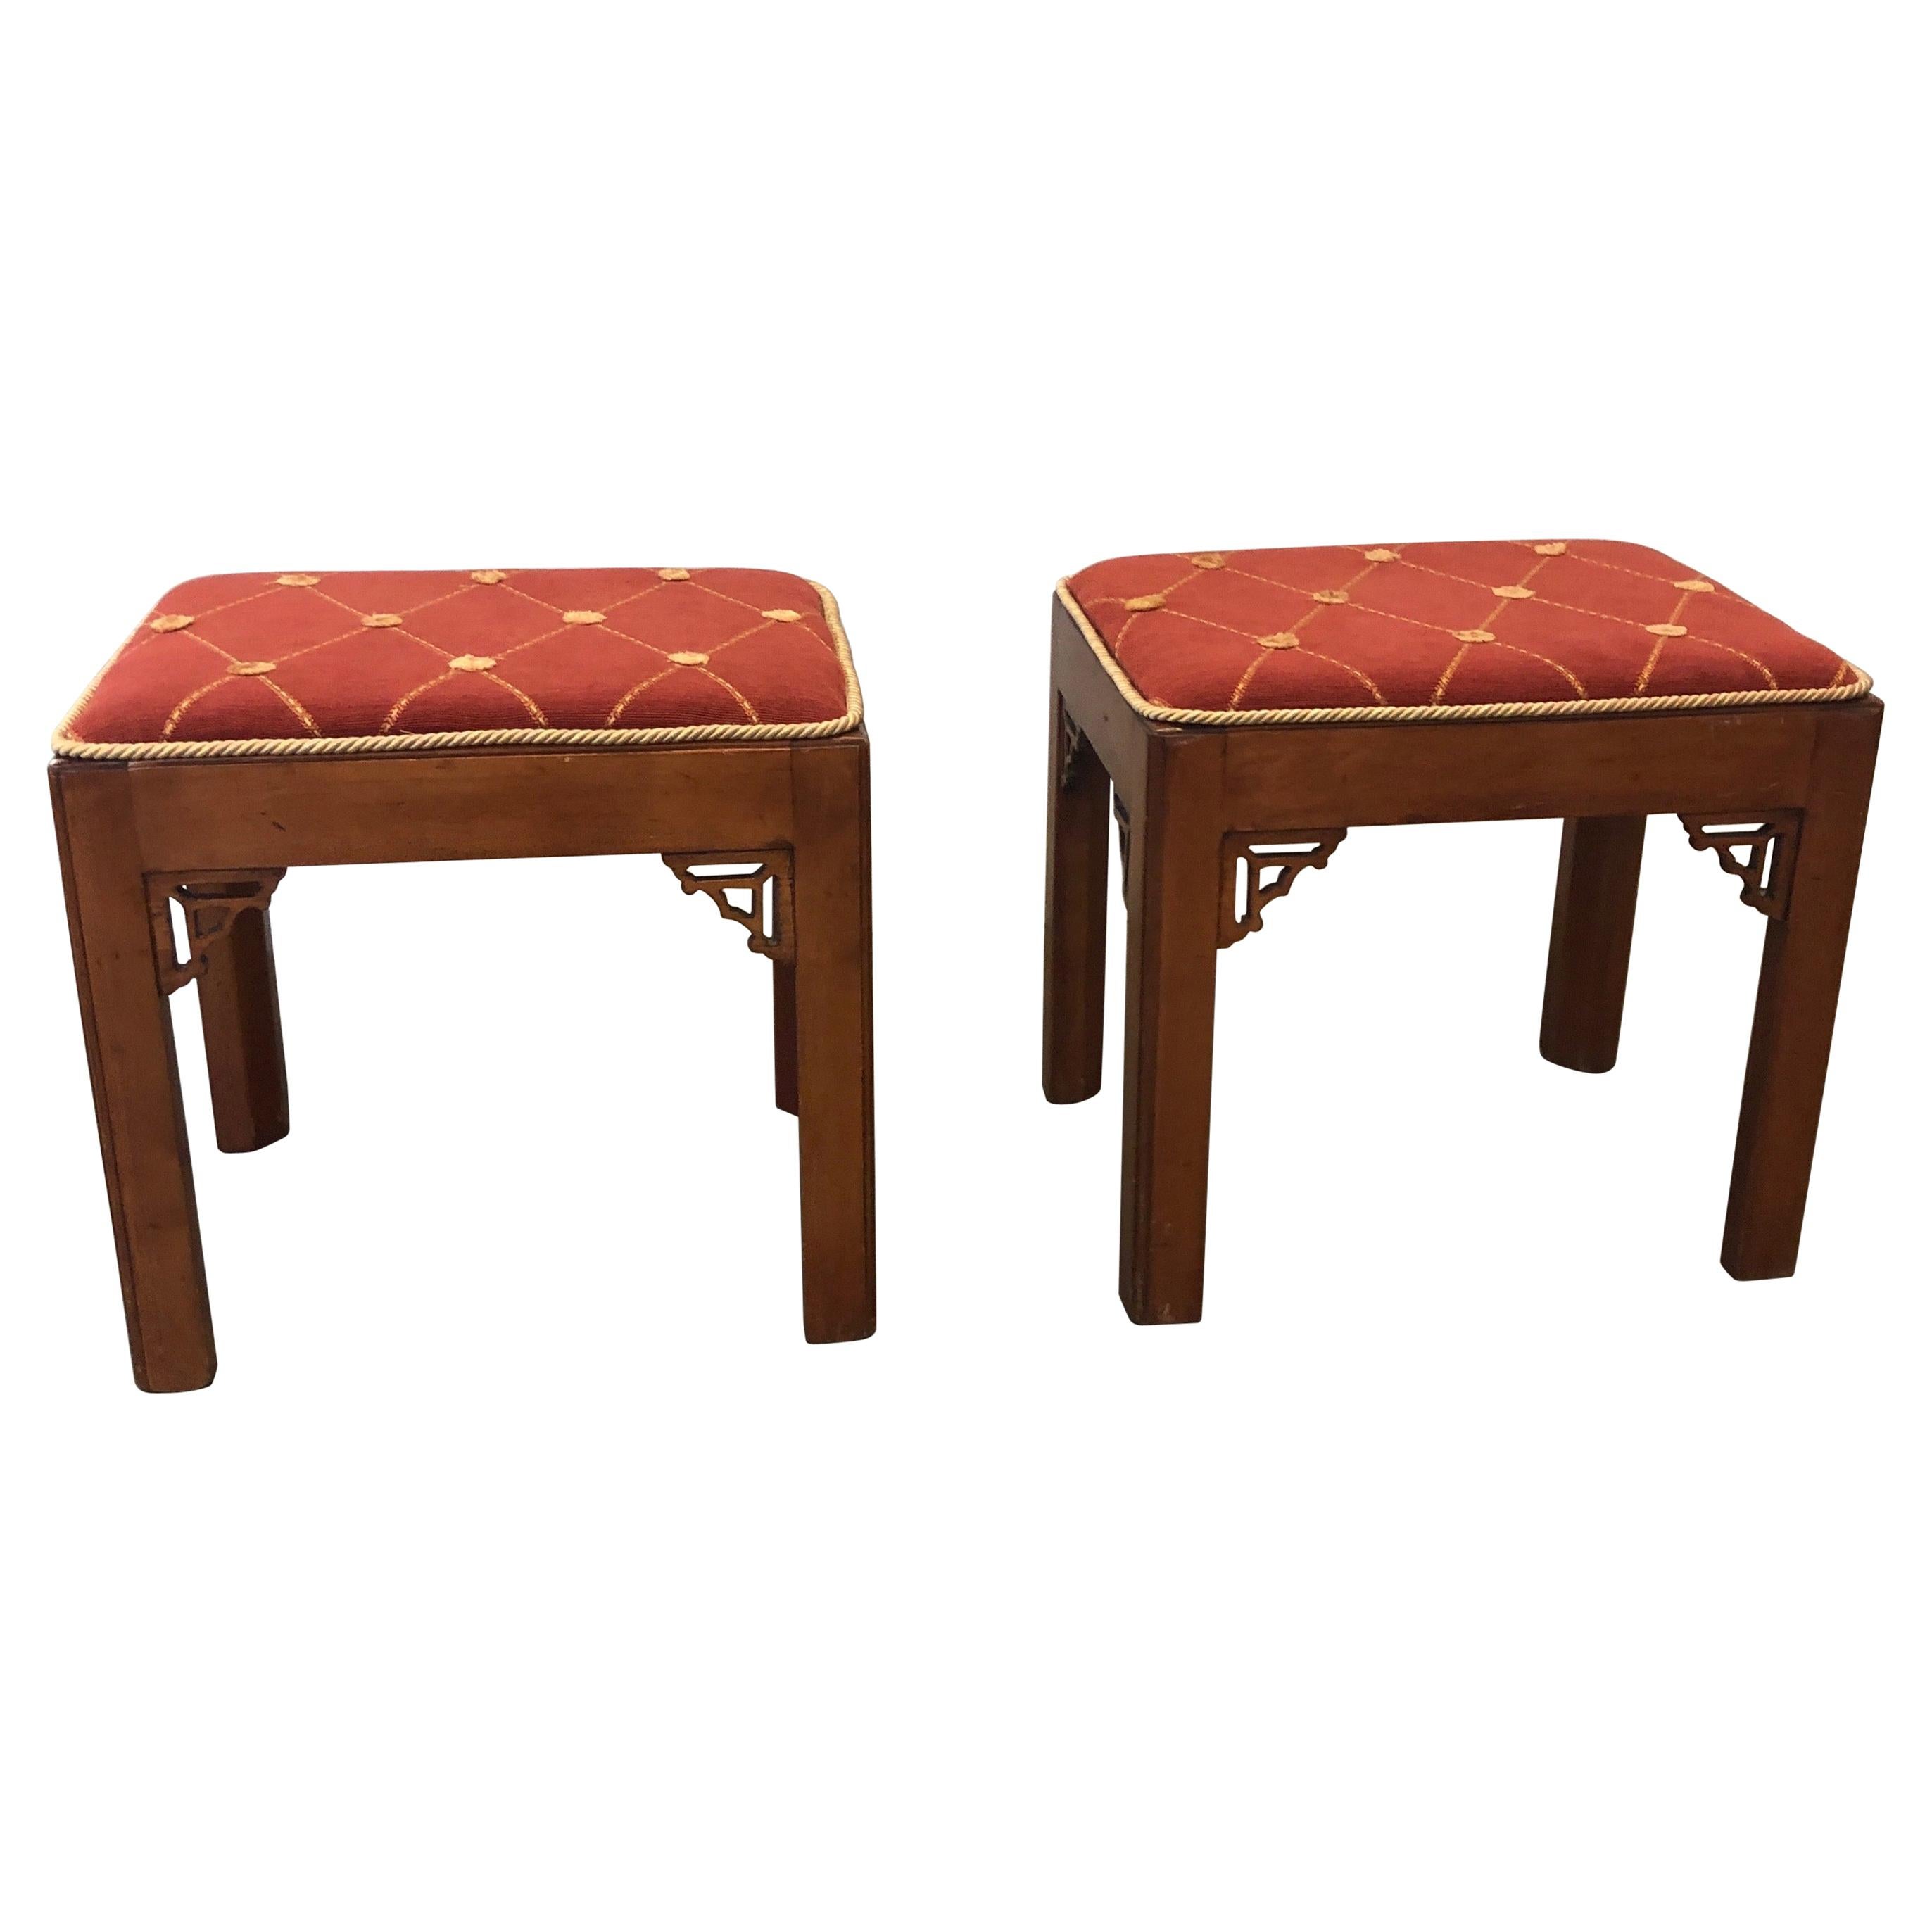 Pair of Vintage Rectangular Fretwork Upholstered Benches